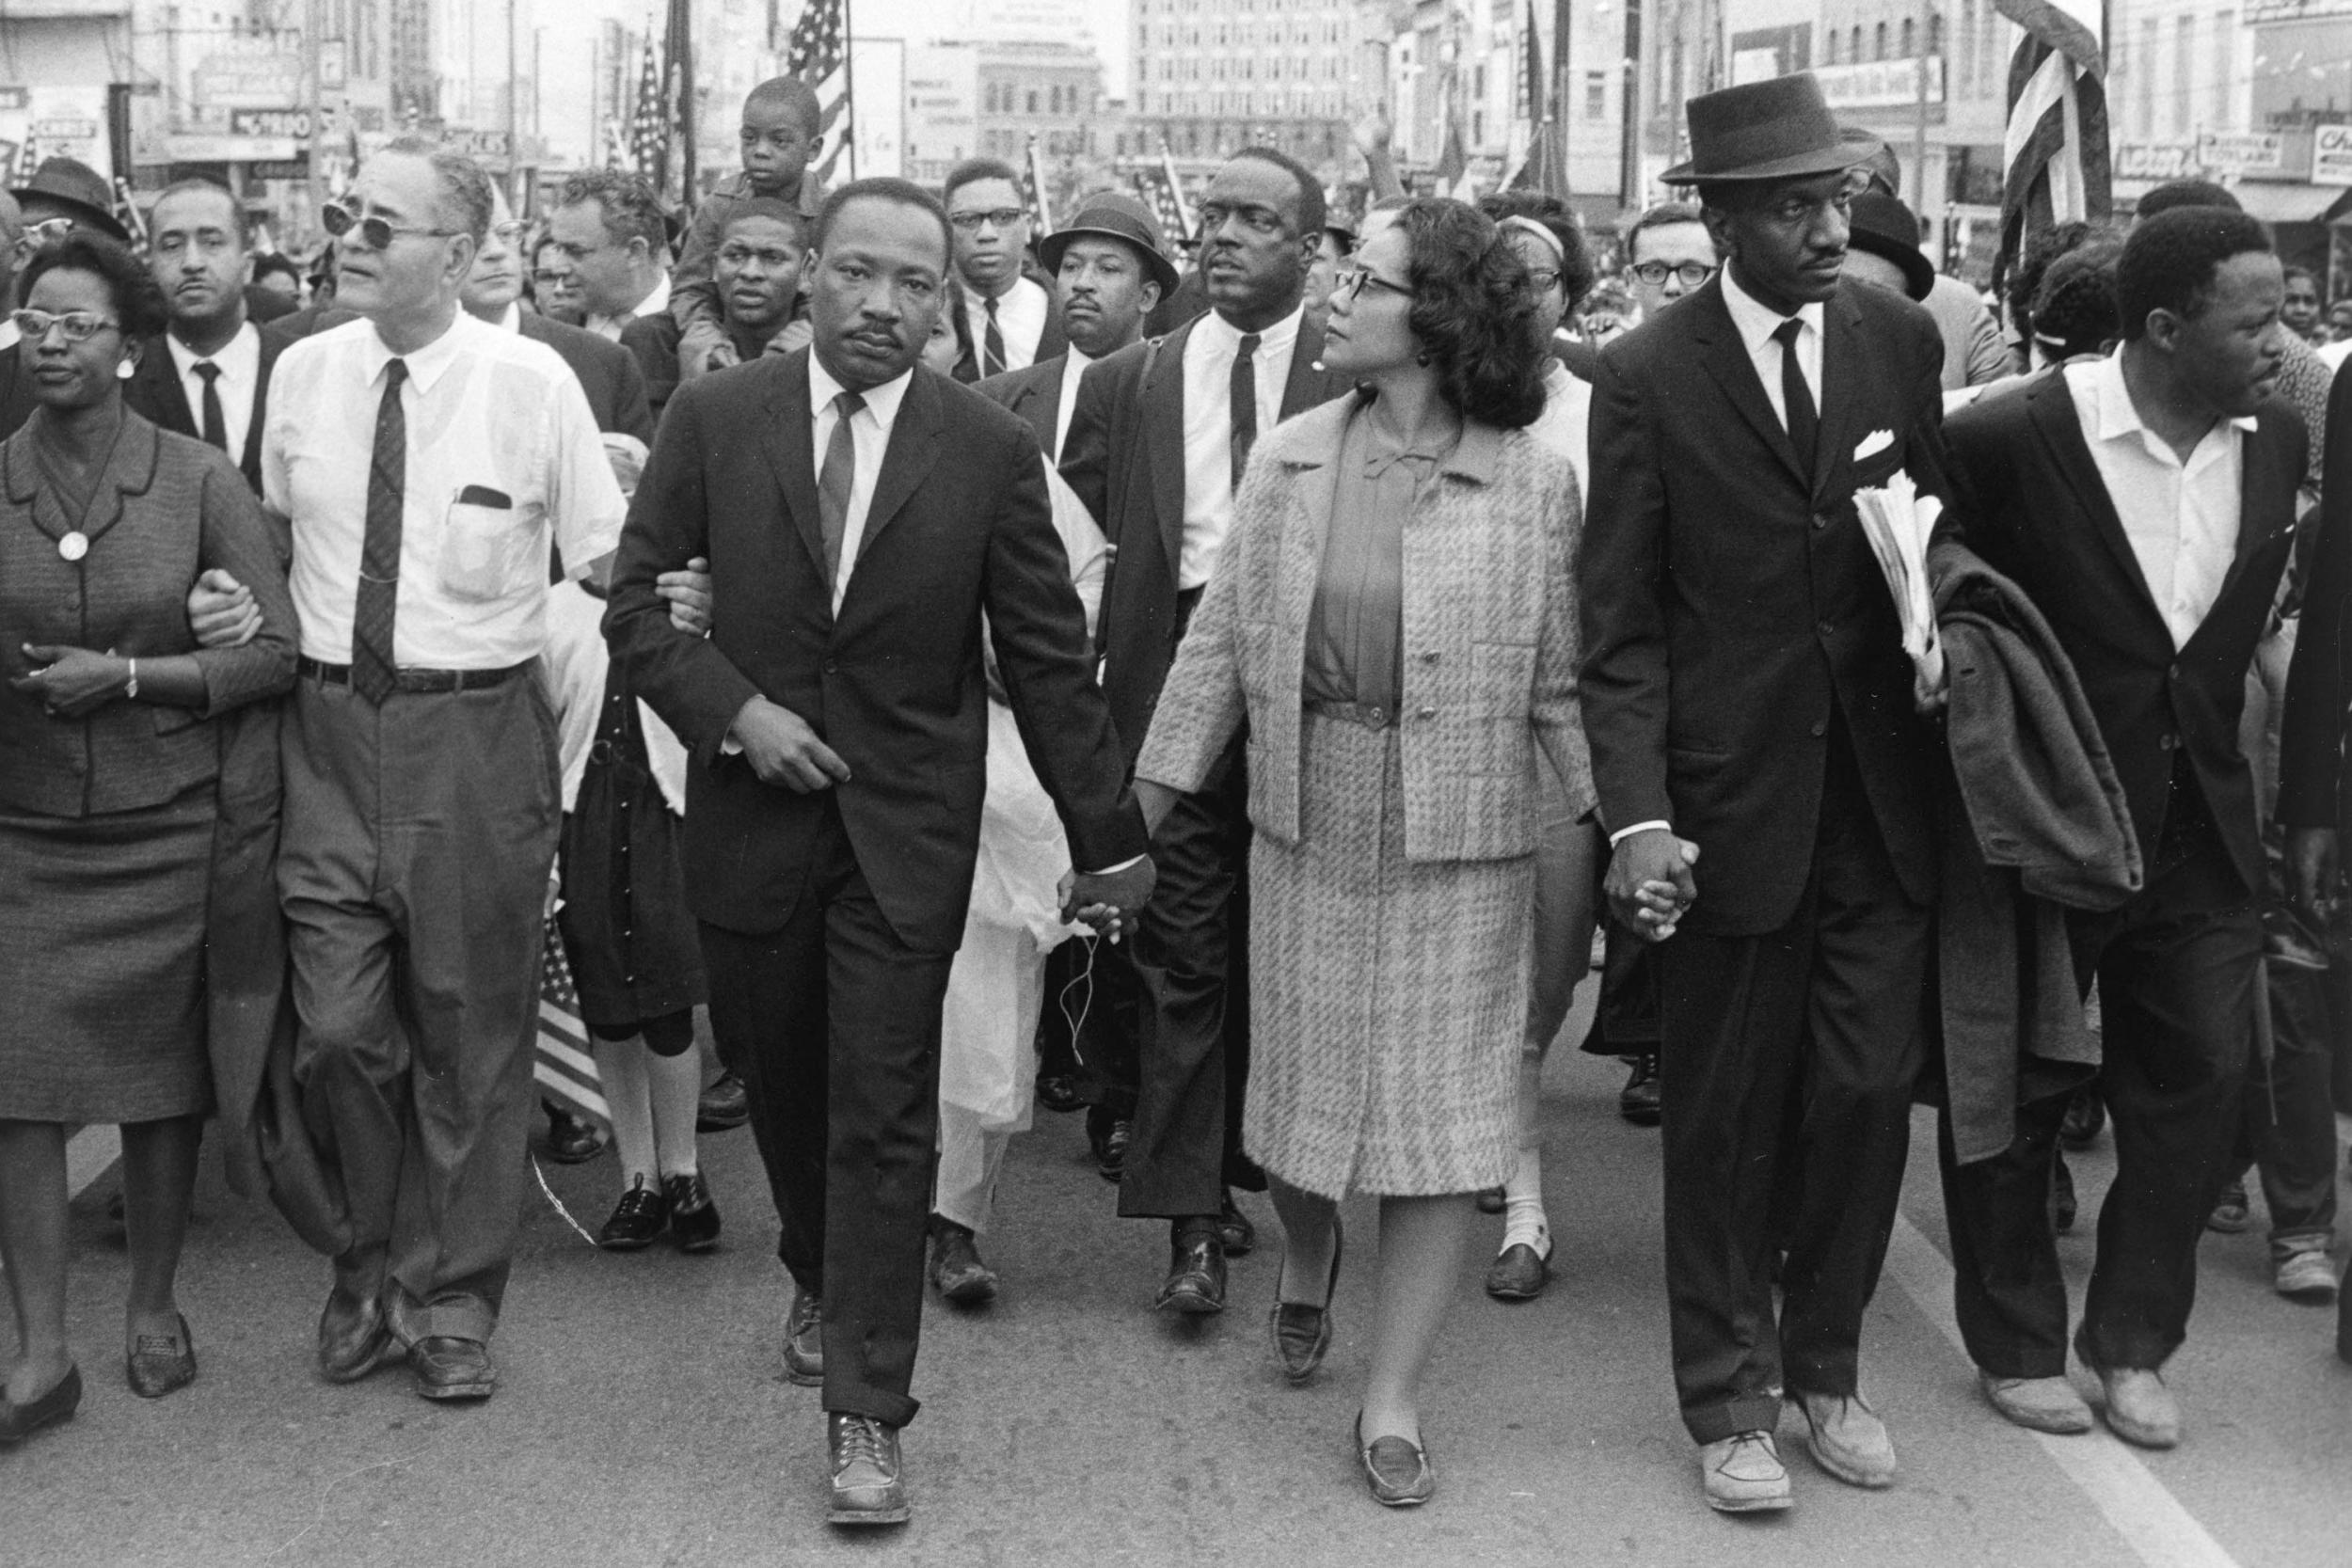 Coretta Scott King has spoken out against Mr Sessions